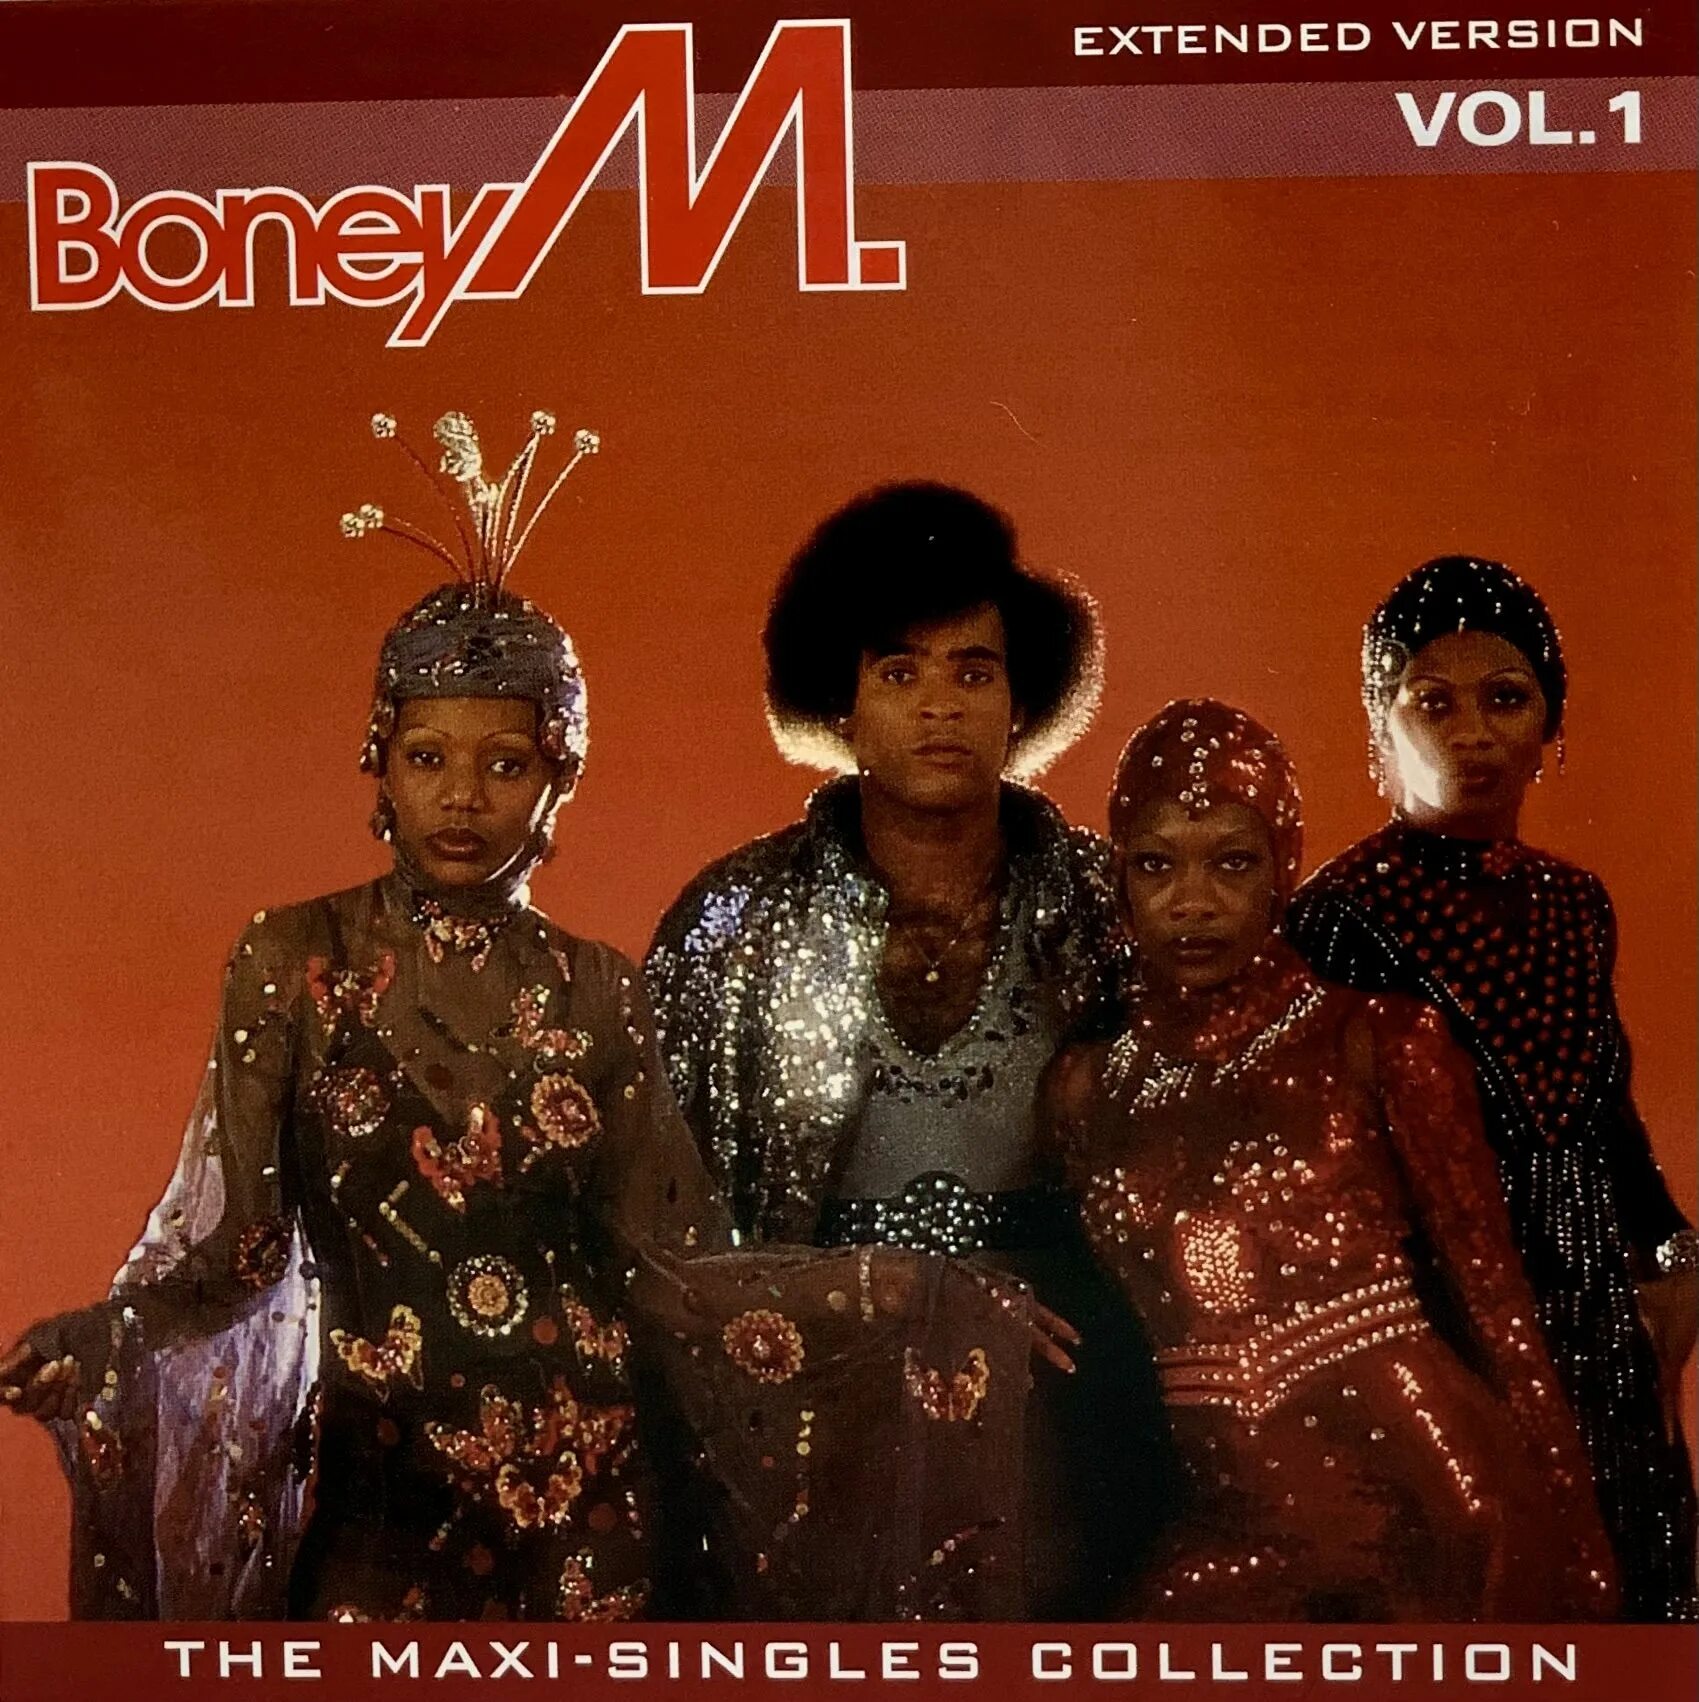 Boney m Maxi-Single CD. CD Boney m. the Maxi-Singles collection Volume 3. Boney m Singles collection. Boney m обложка. Collection 2005